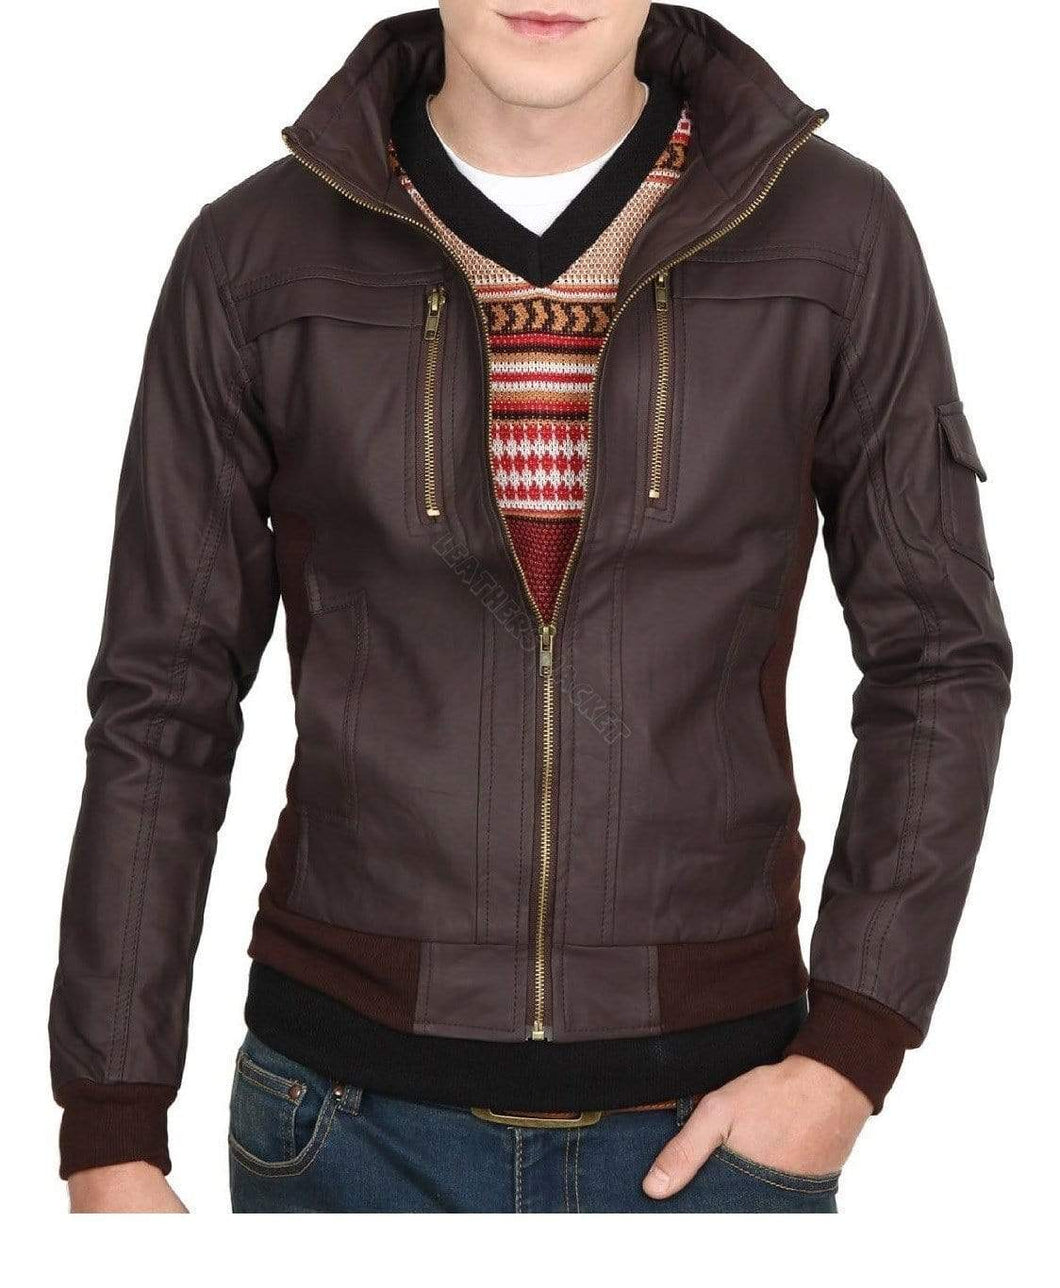 Mens Slim Leather Jacket, Brown Biker Leather Jacket, Zipper Pocket Jacket - leathersguru